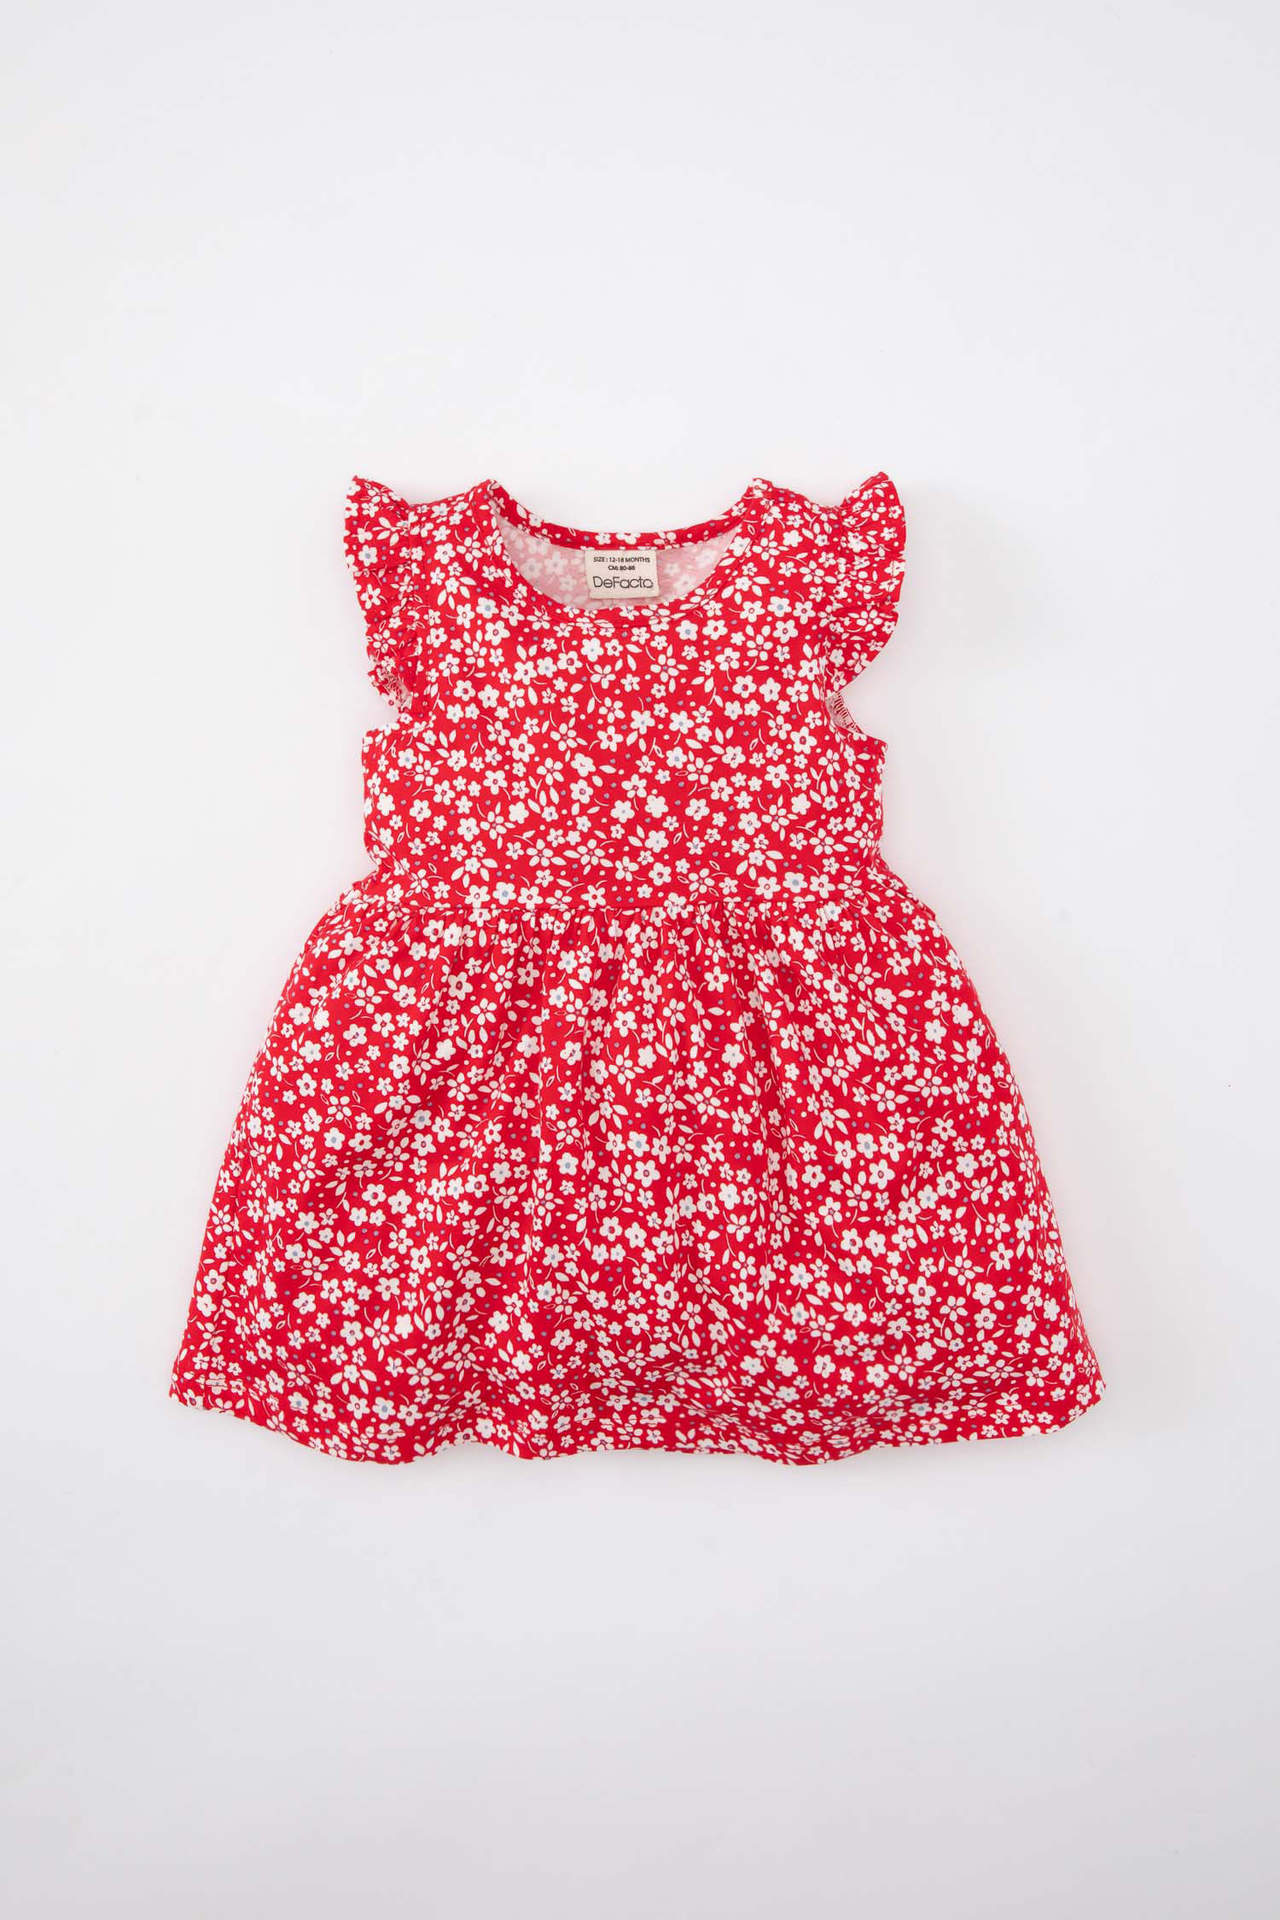 DEFACTO Baby Girl Patterned Sleeveless Dress